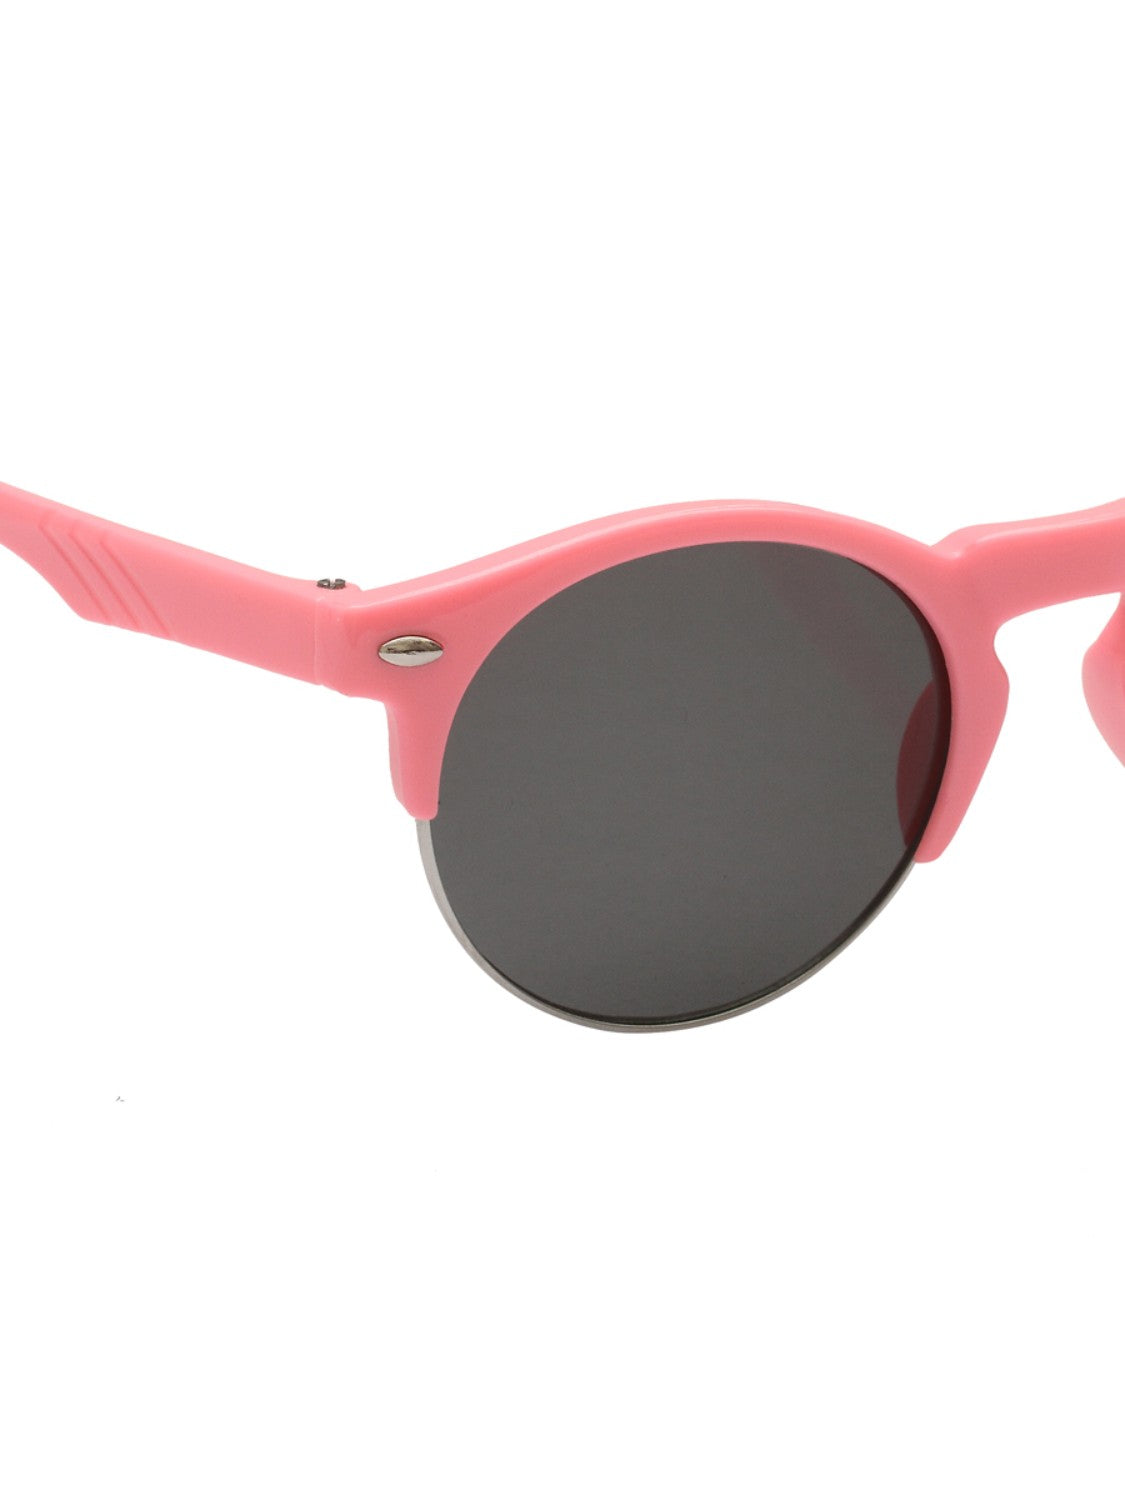 Stol'n Kids Pink Round Sunglasses - Pink